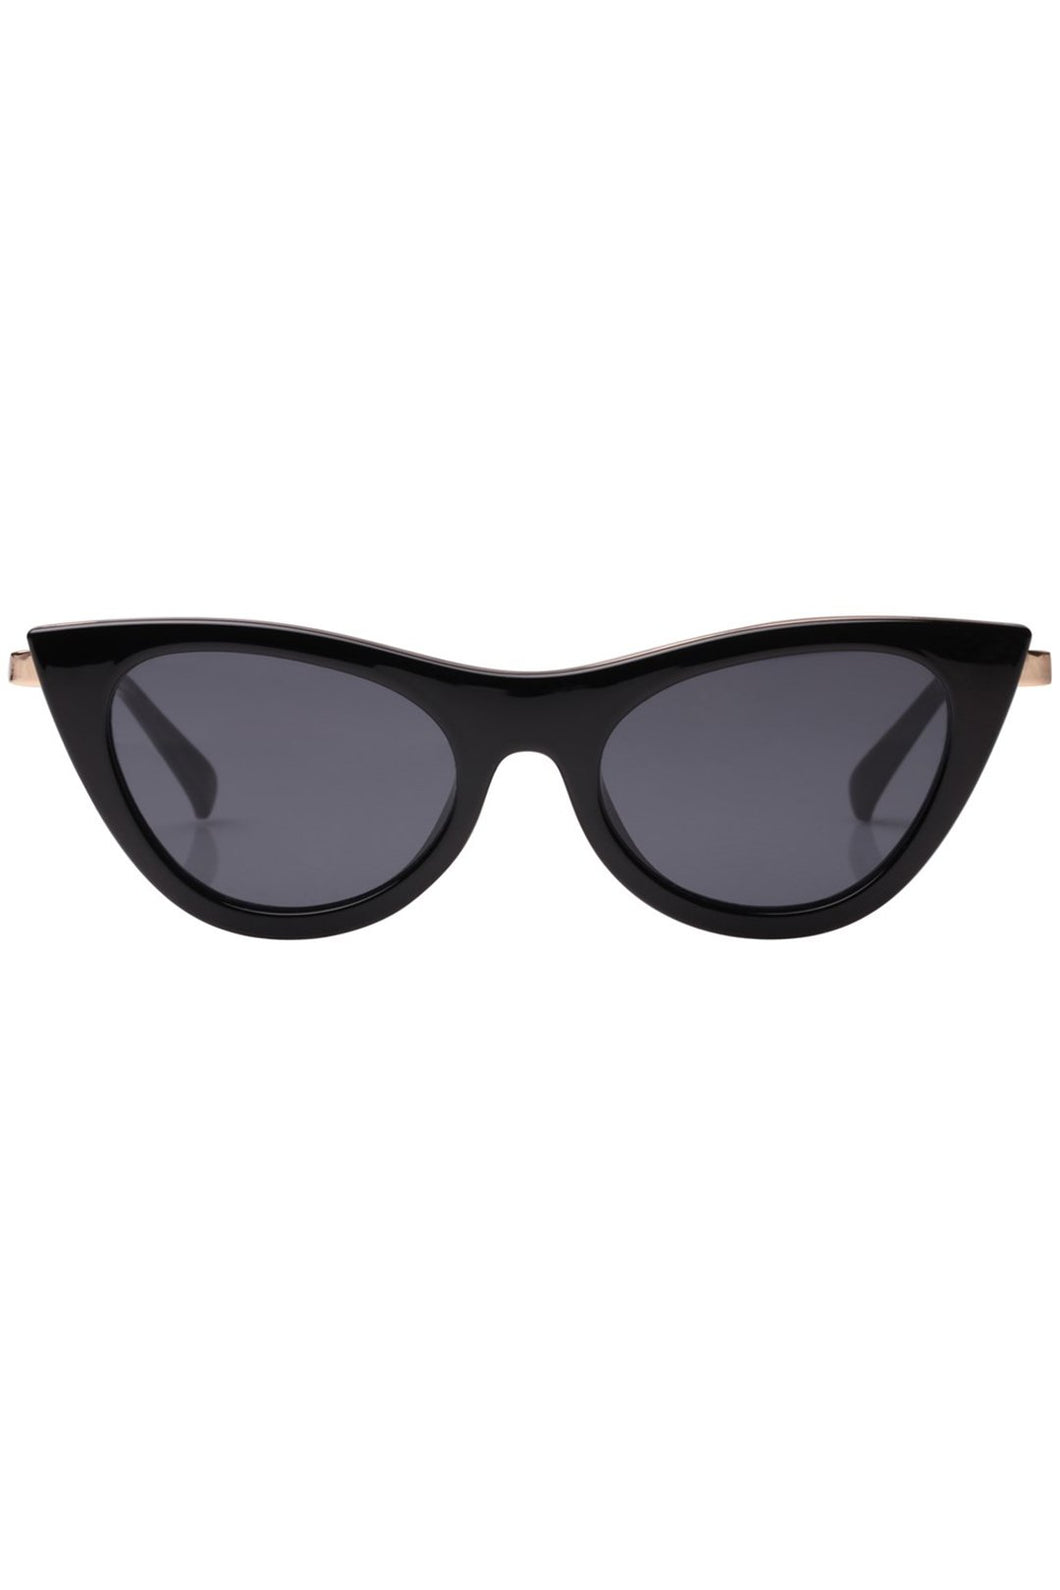 Le Specs - Enchantress sunglasses - Black/Smoke Mono